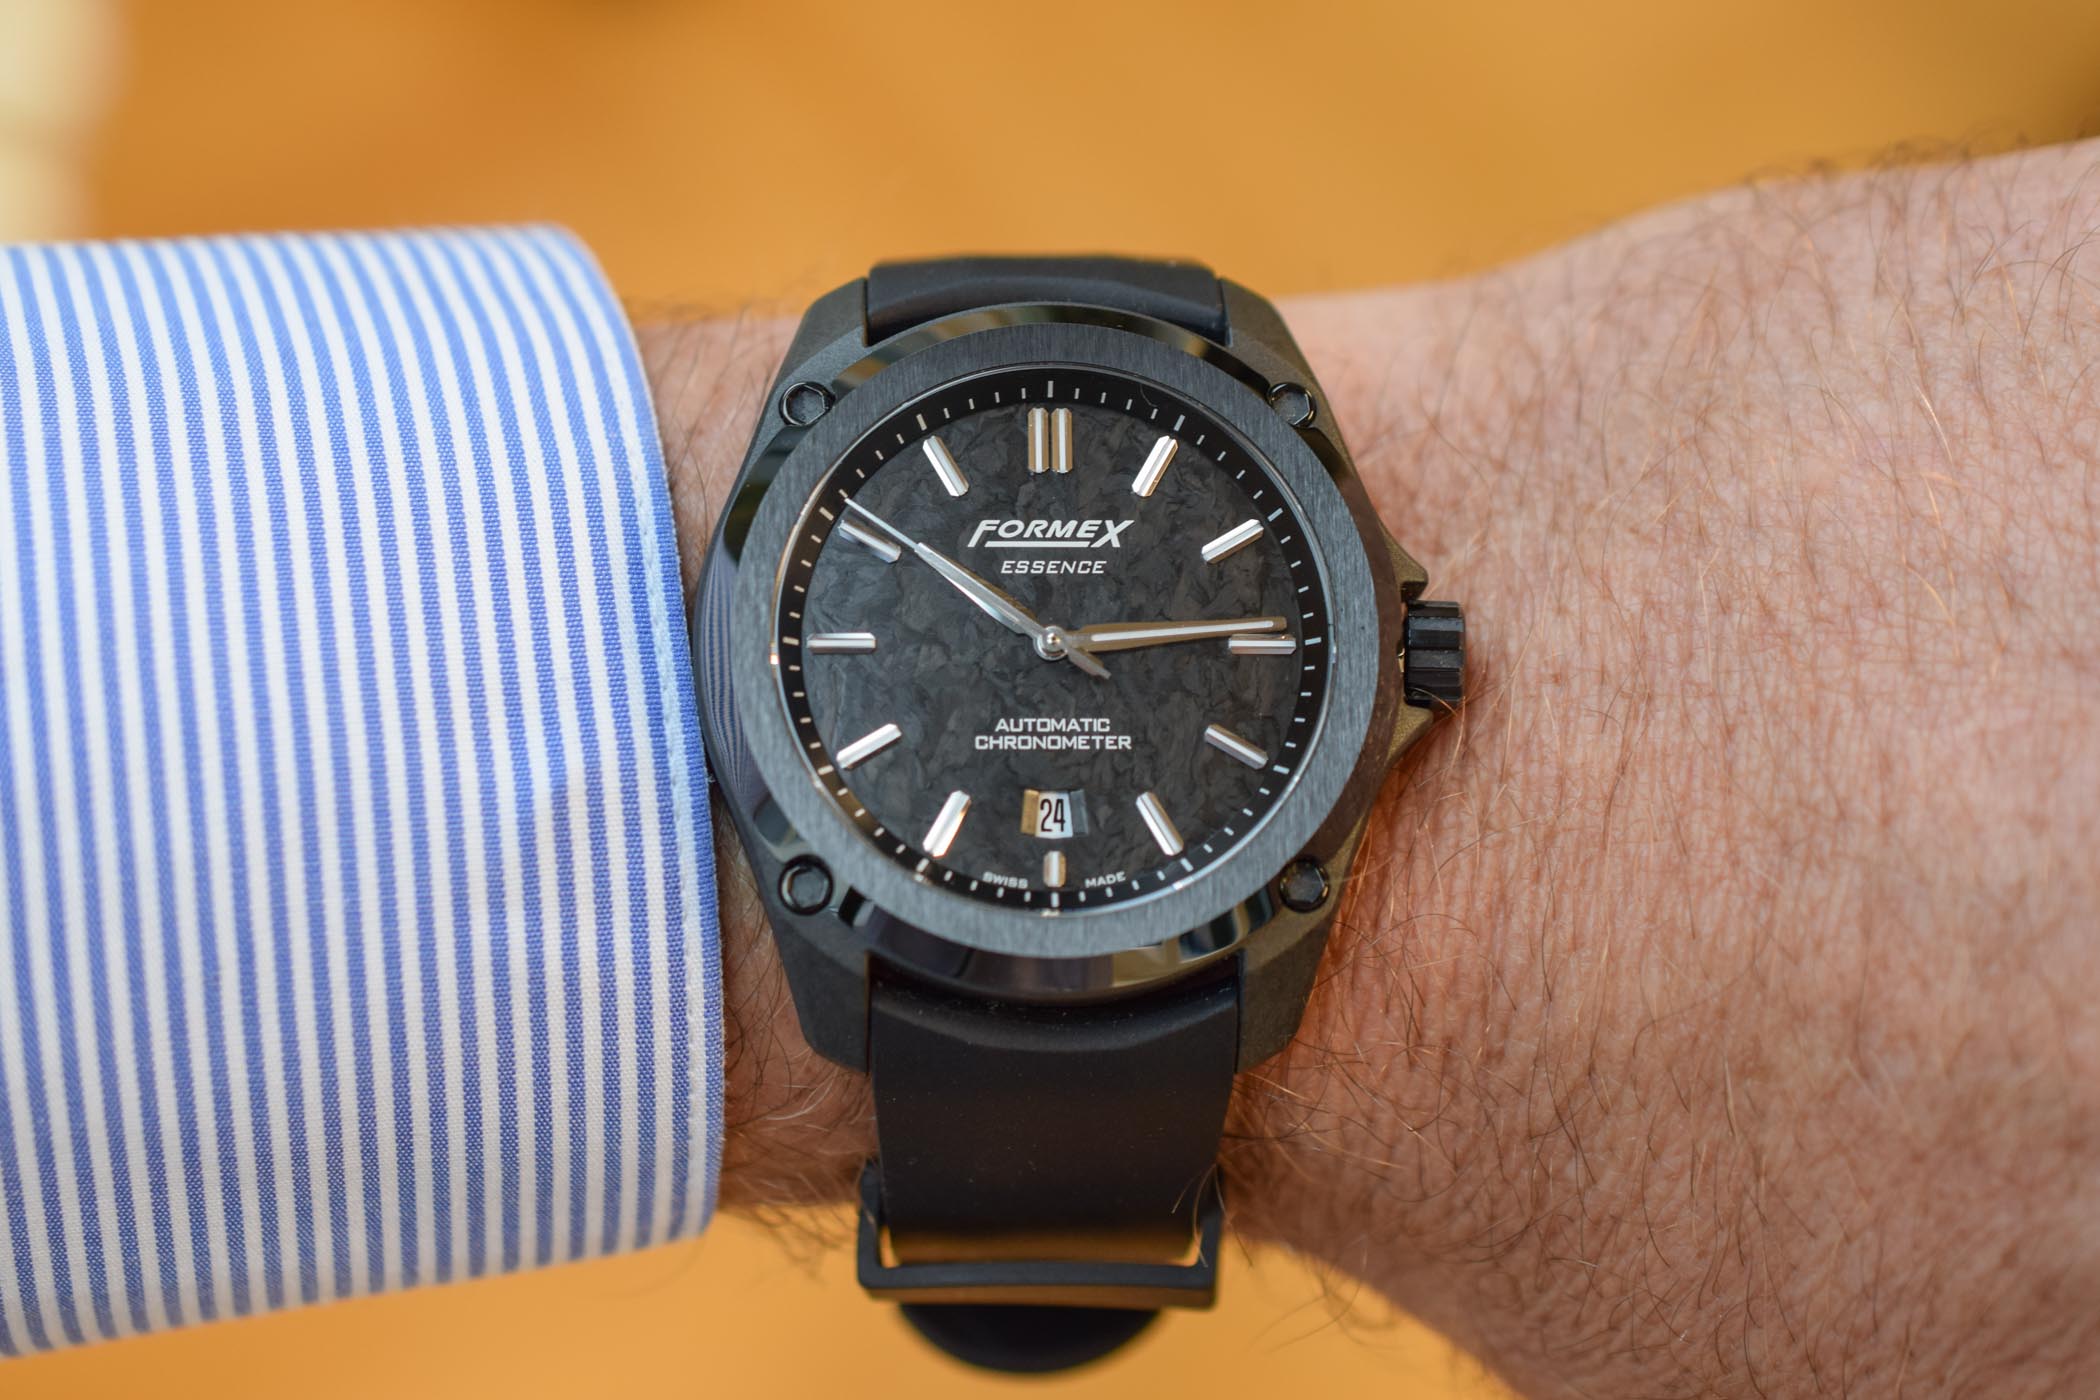 Formex Essence Leggera - Chronometer Certified Carbon Watch Value Proposition